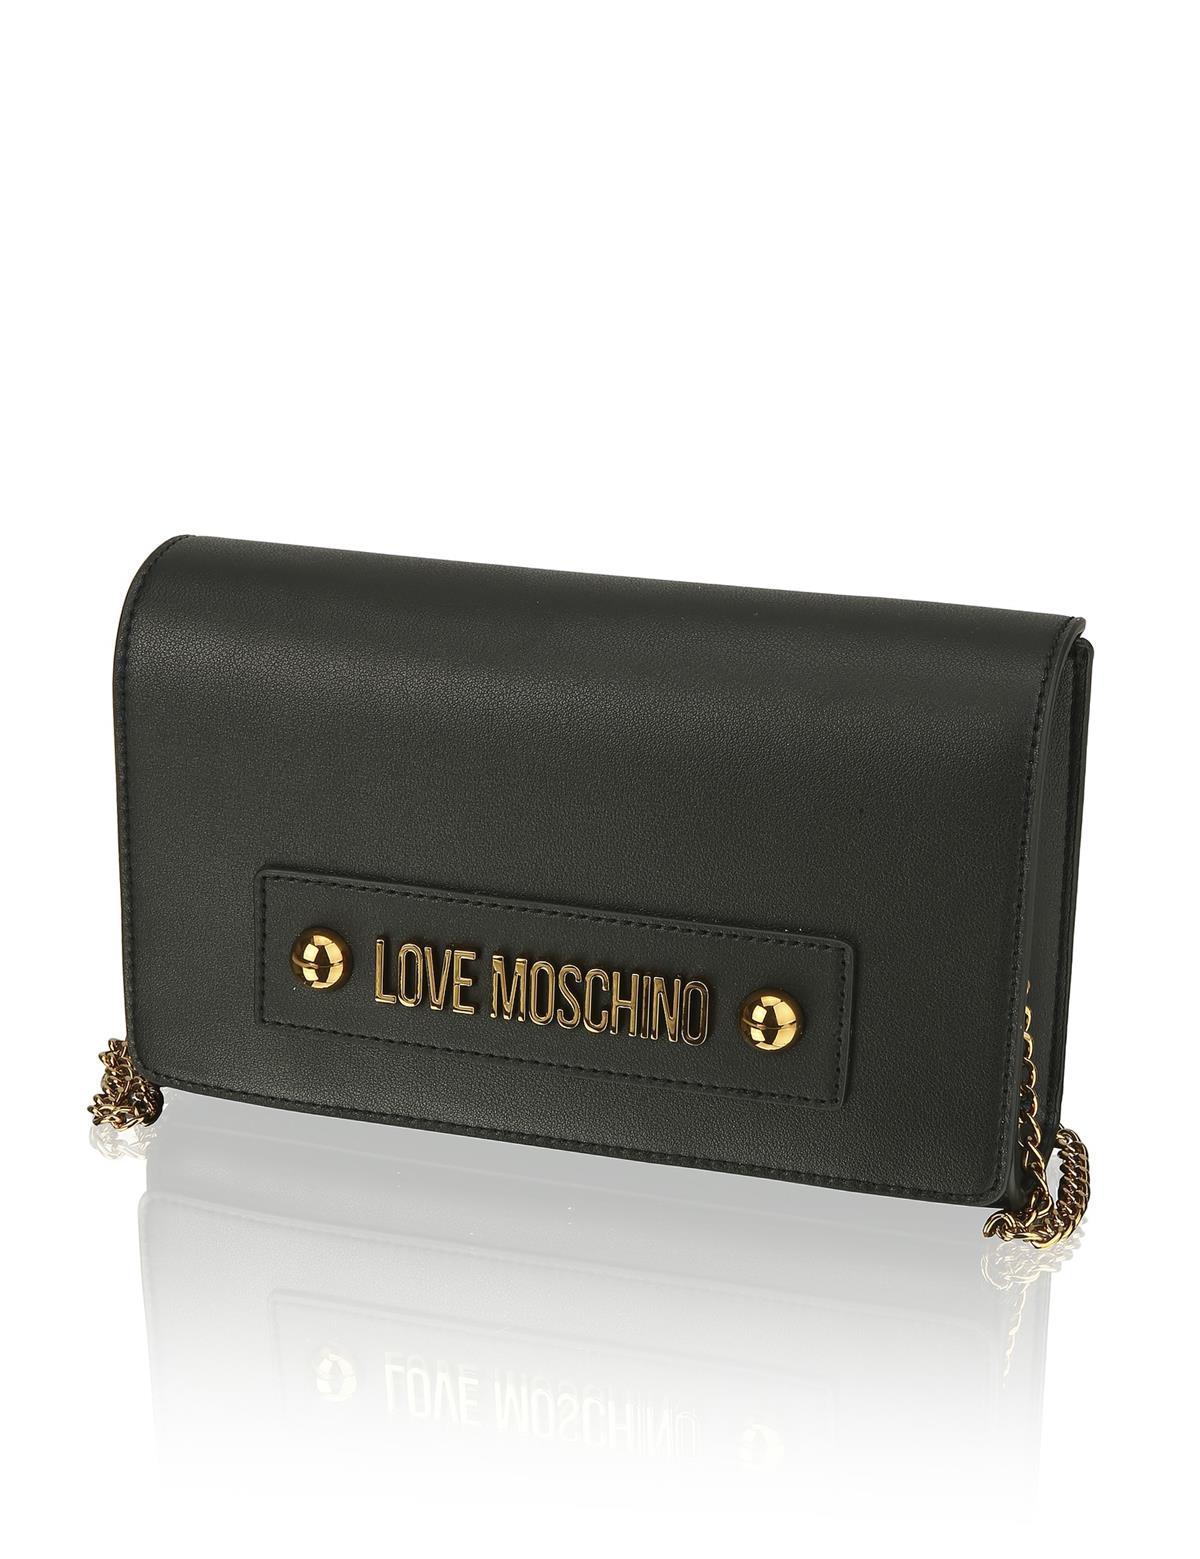 HUMANIC 19 Love Moschino Mini Bag EUR 110 6131402200